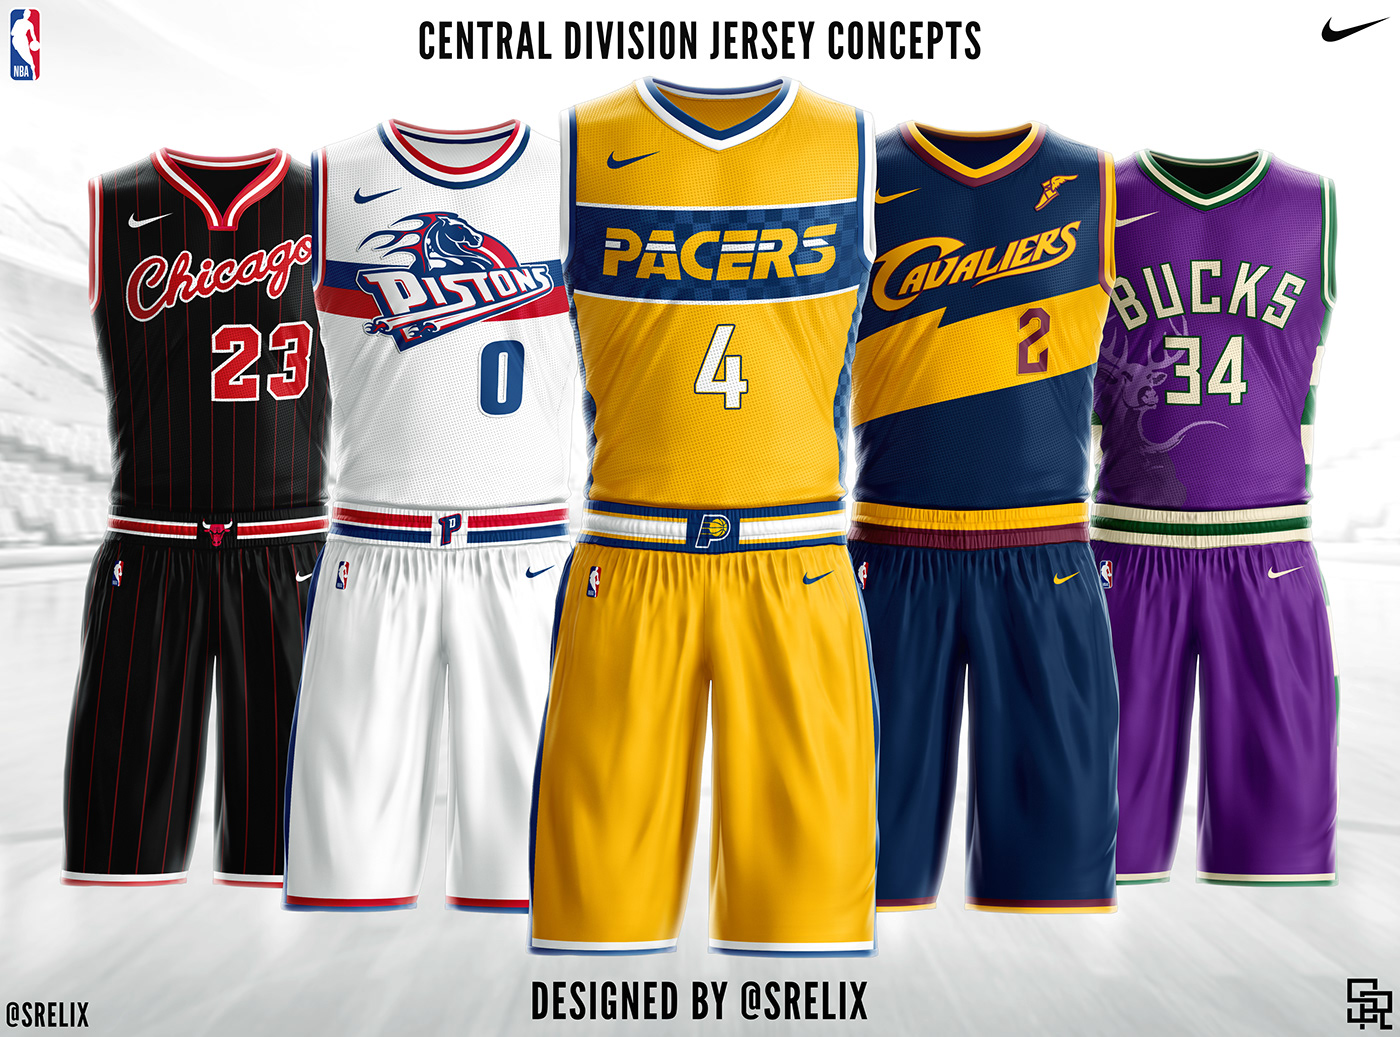 jersey concepts nba